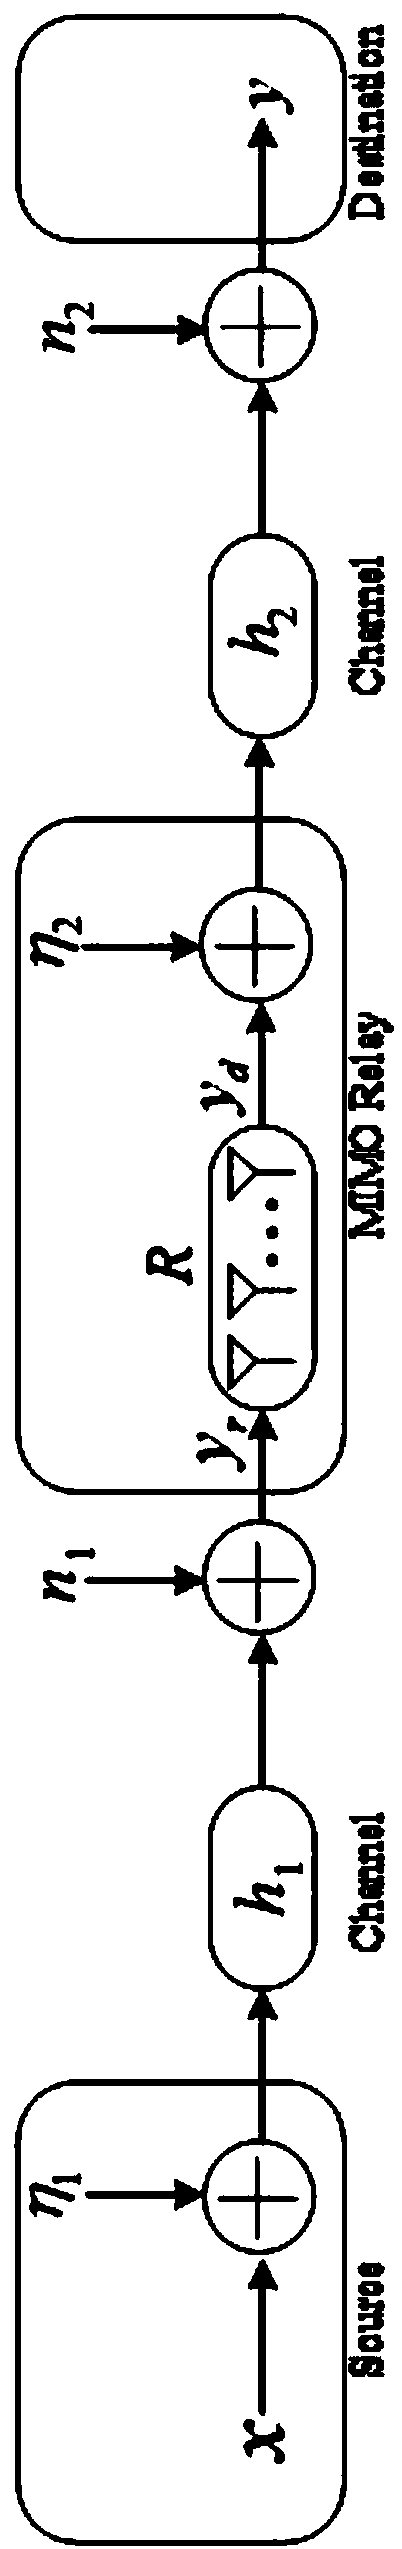 MIMO relay antenna design method